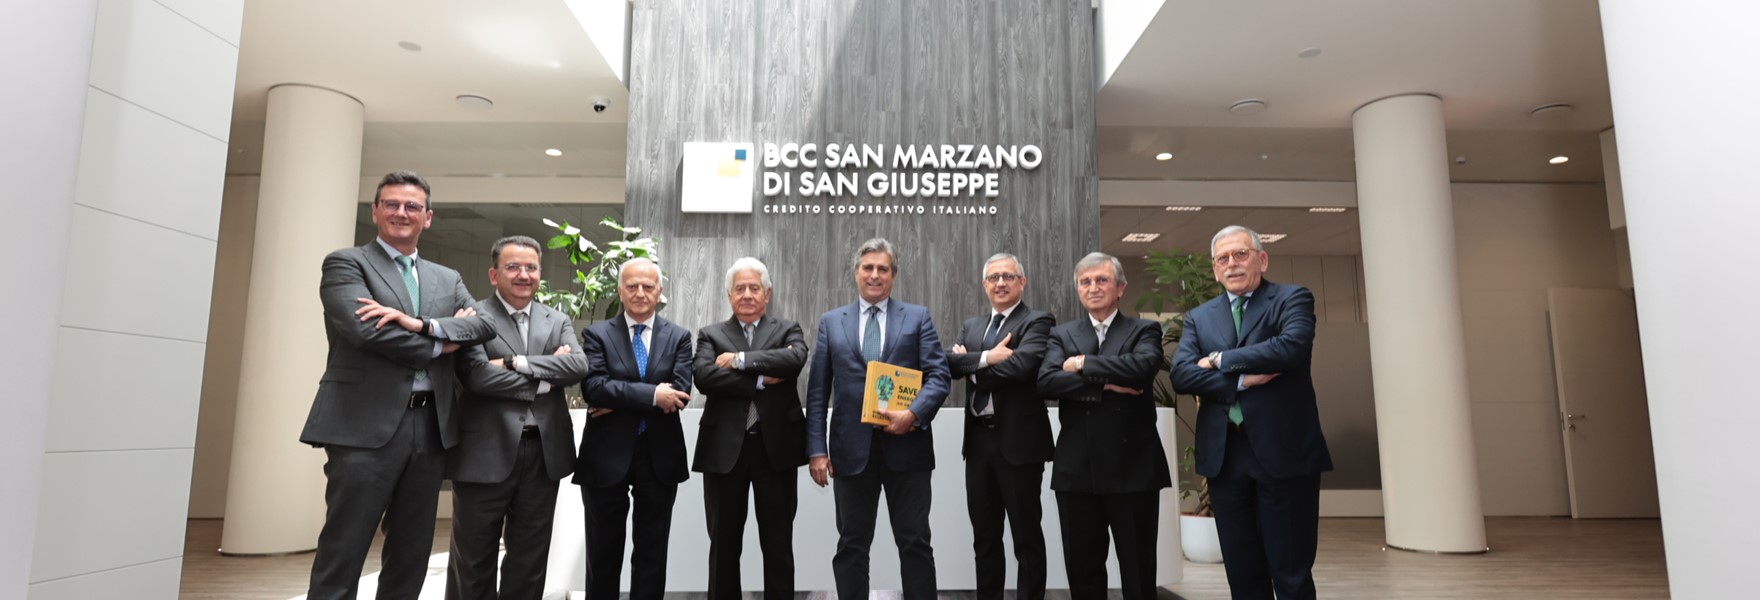 Governance BCC San Marzano 